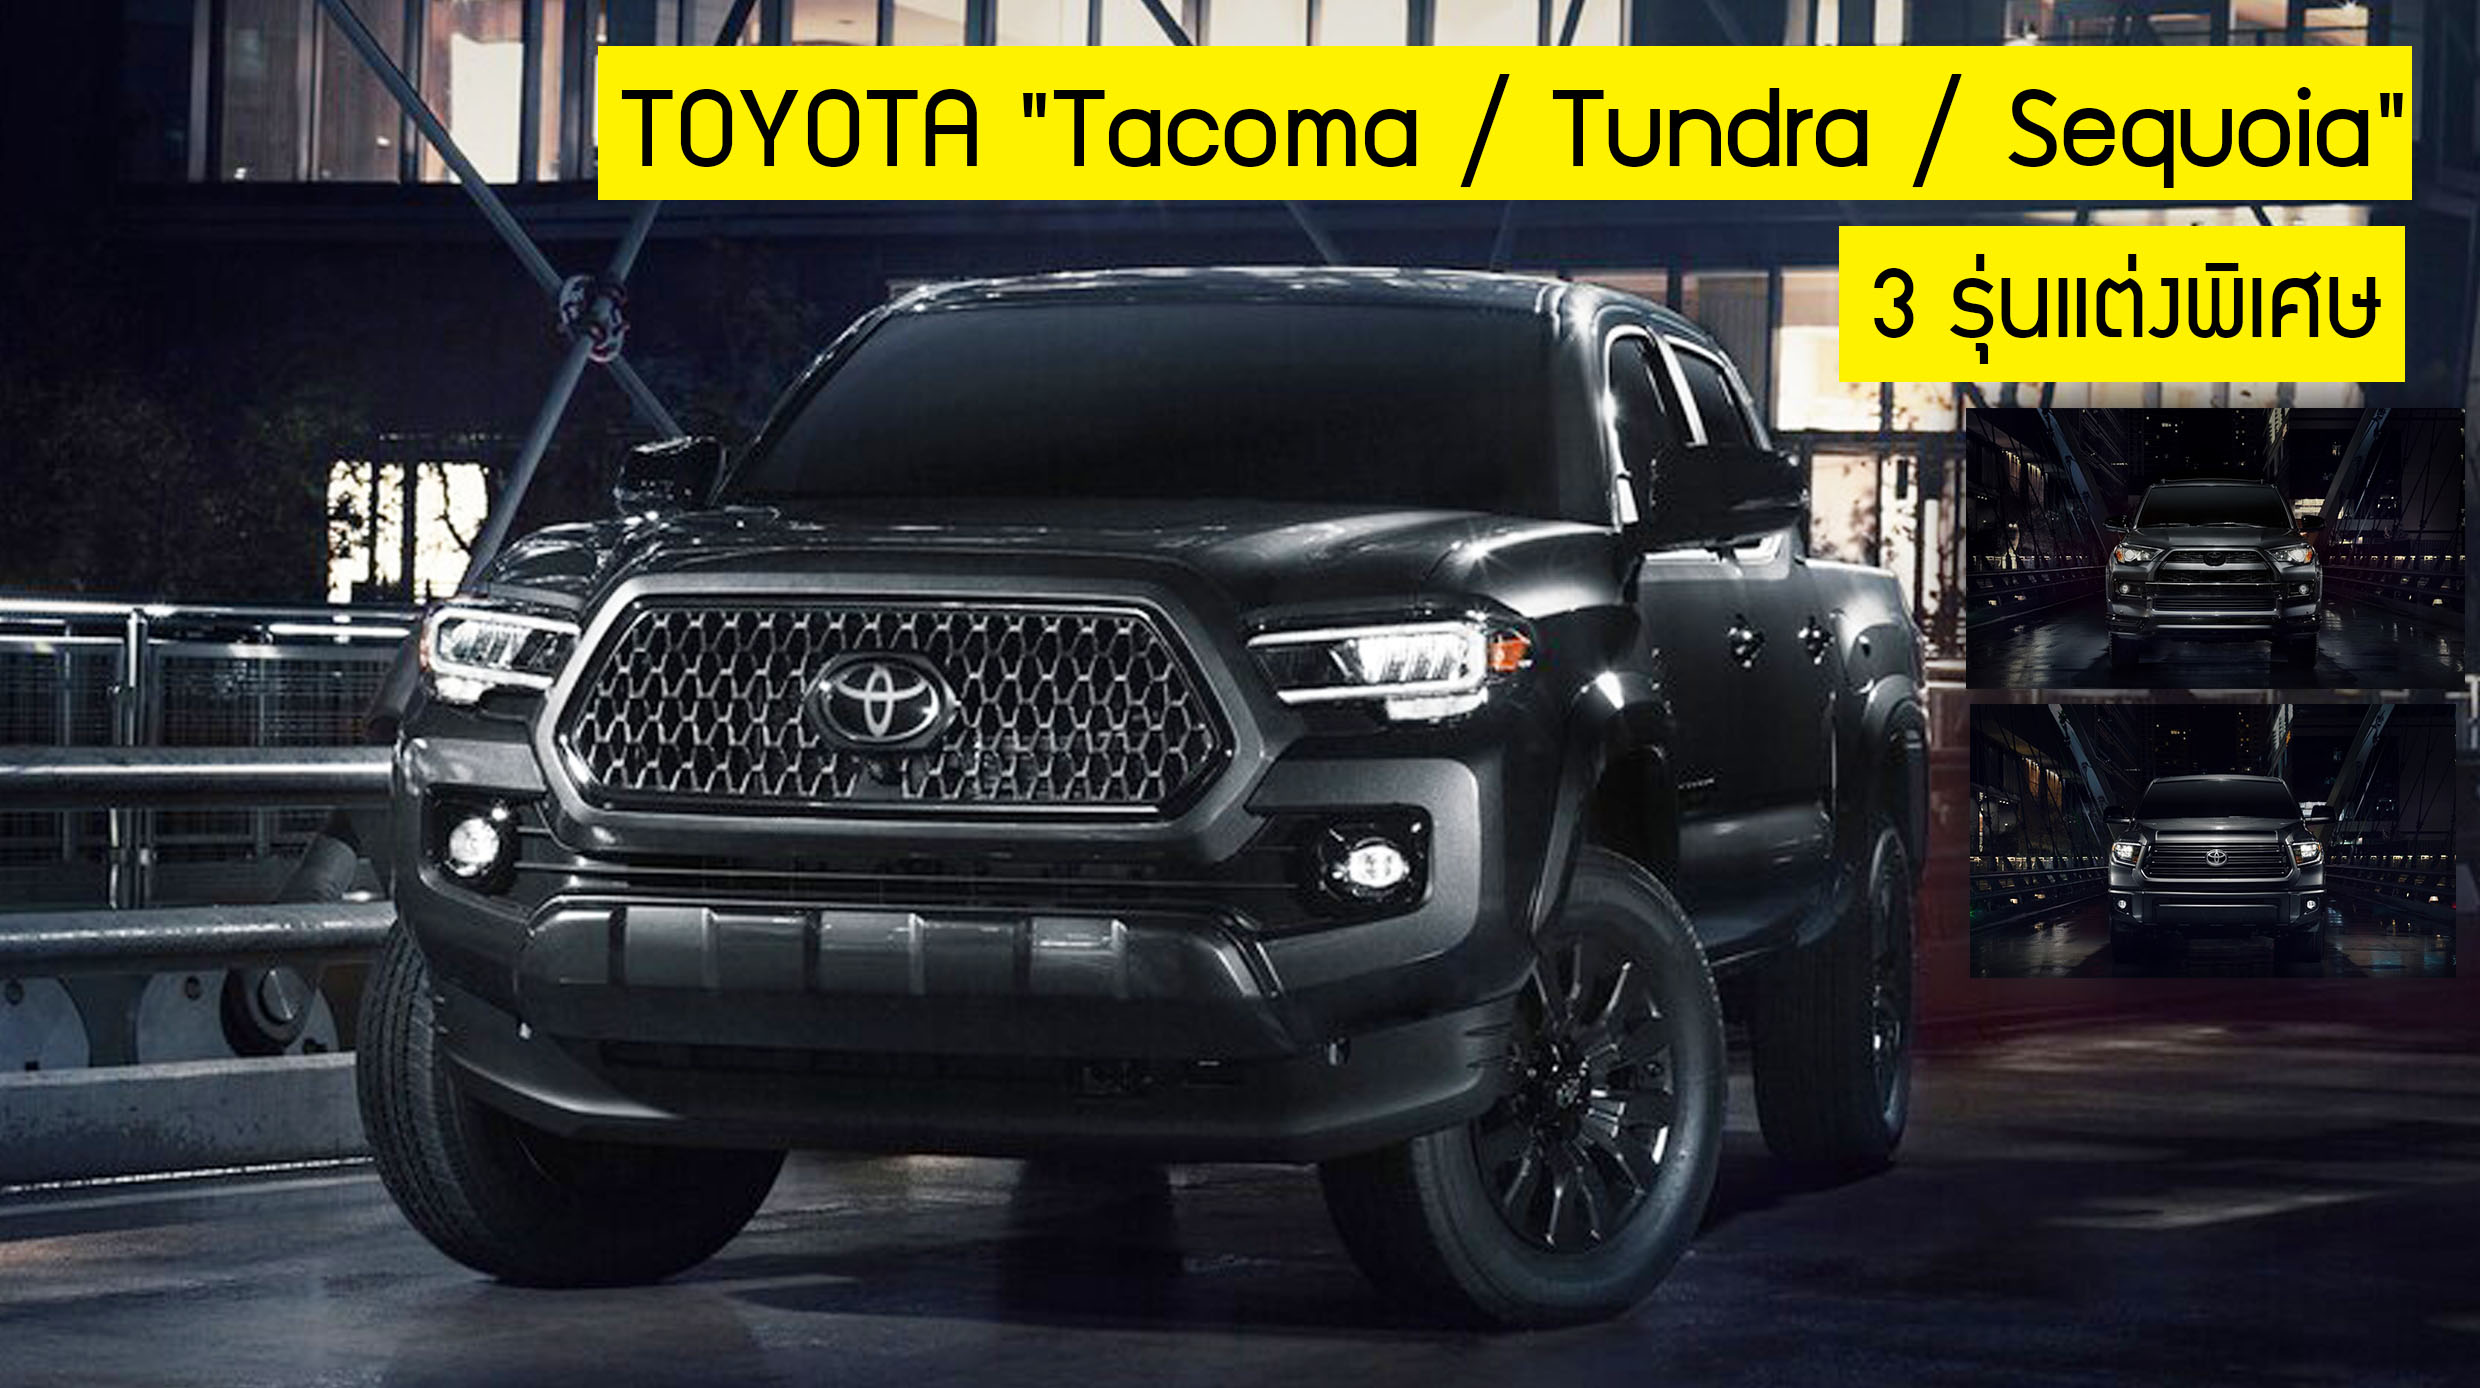 TOYOTA “Tacoma / Tundra / Sequoia” 3 Night Shade Edition อัศวินดำ รุ่นพิเศษ